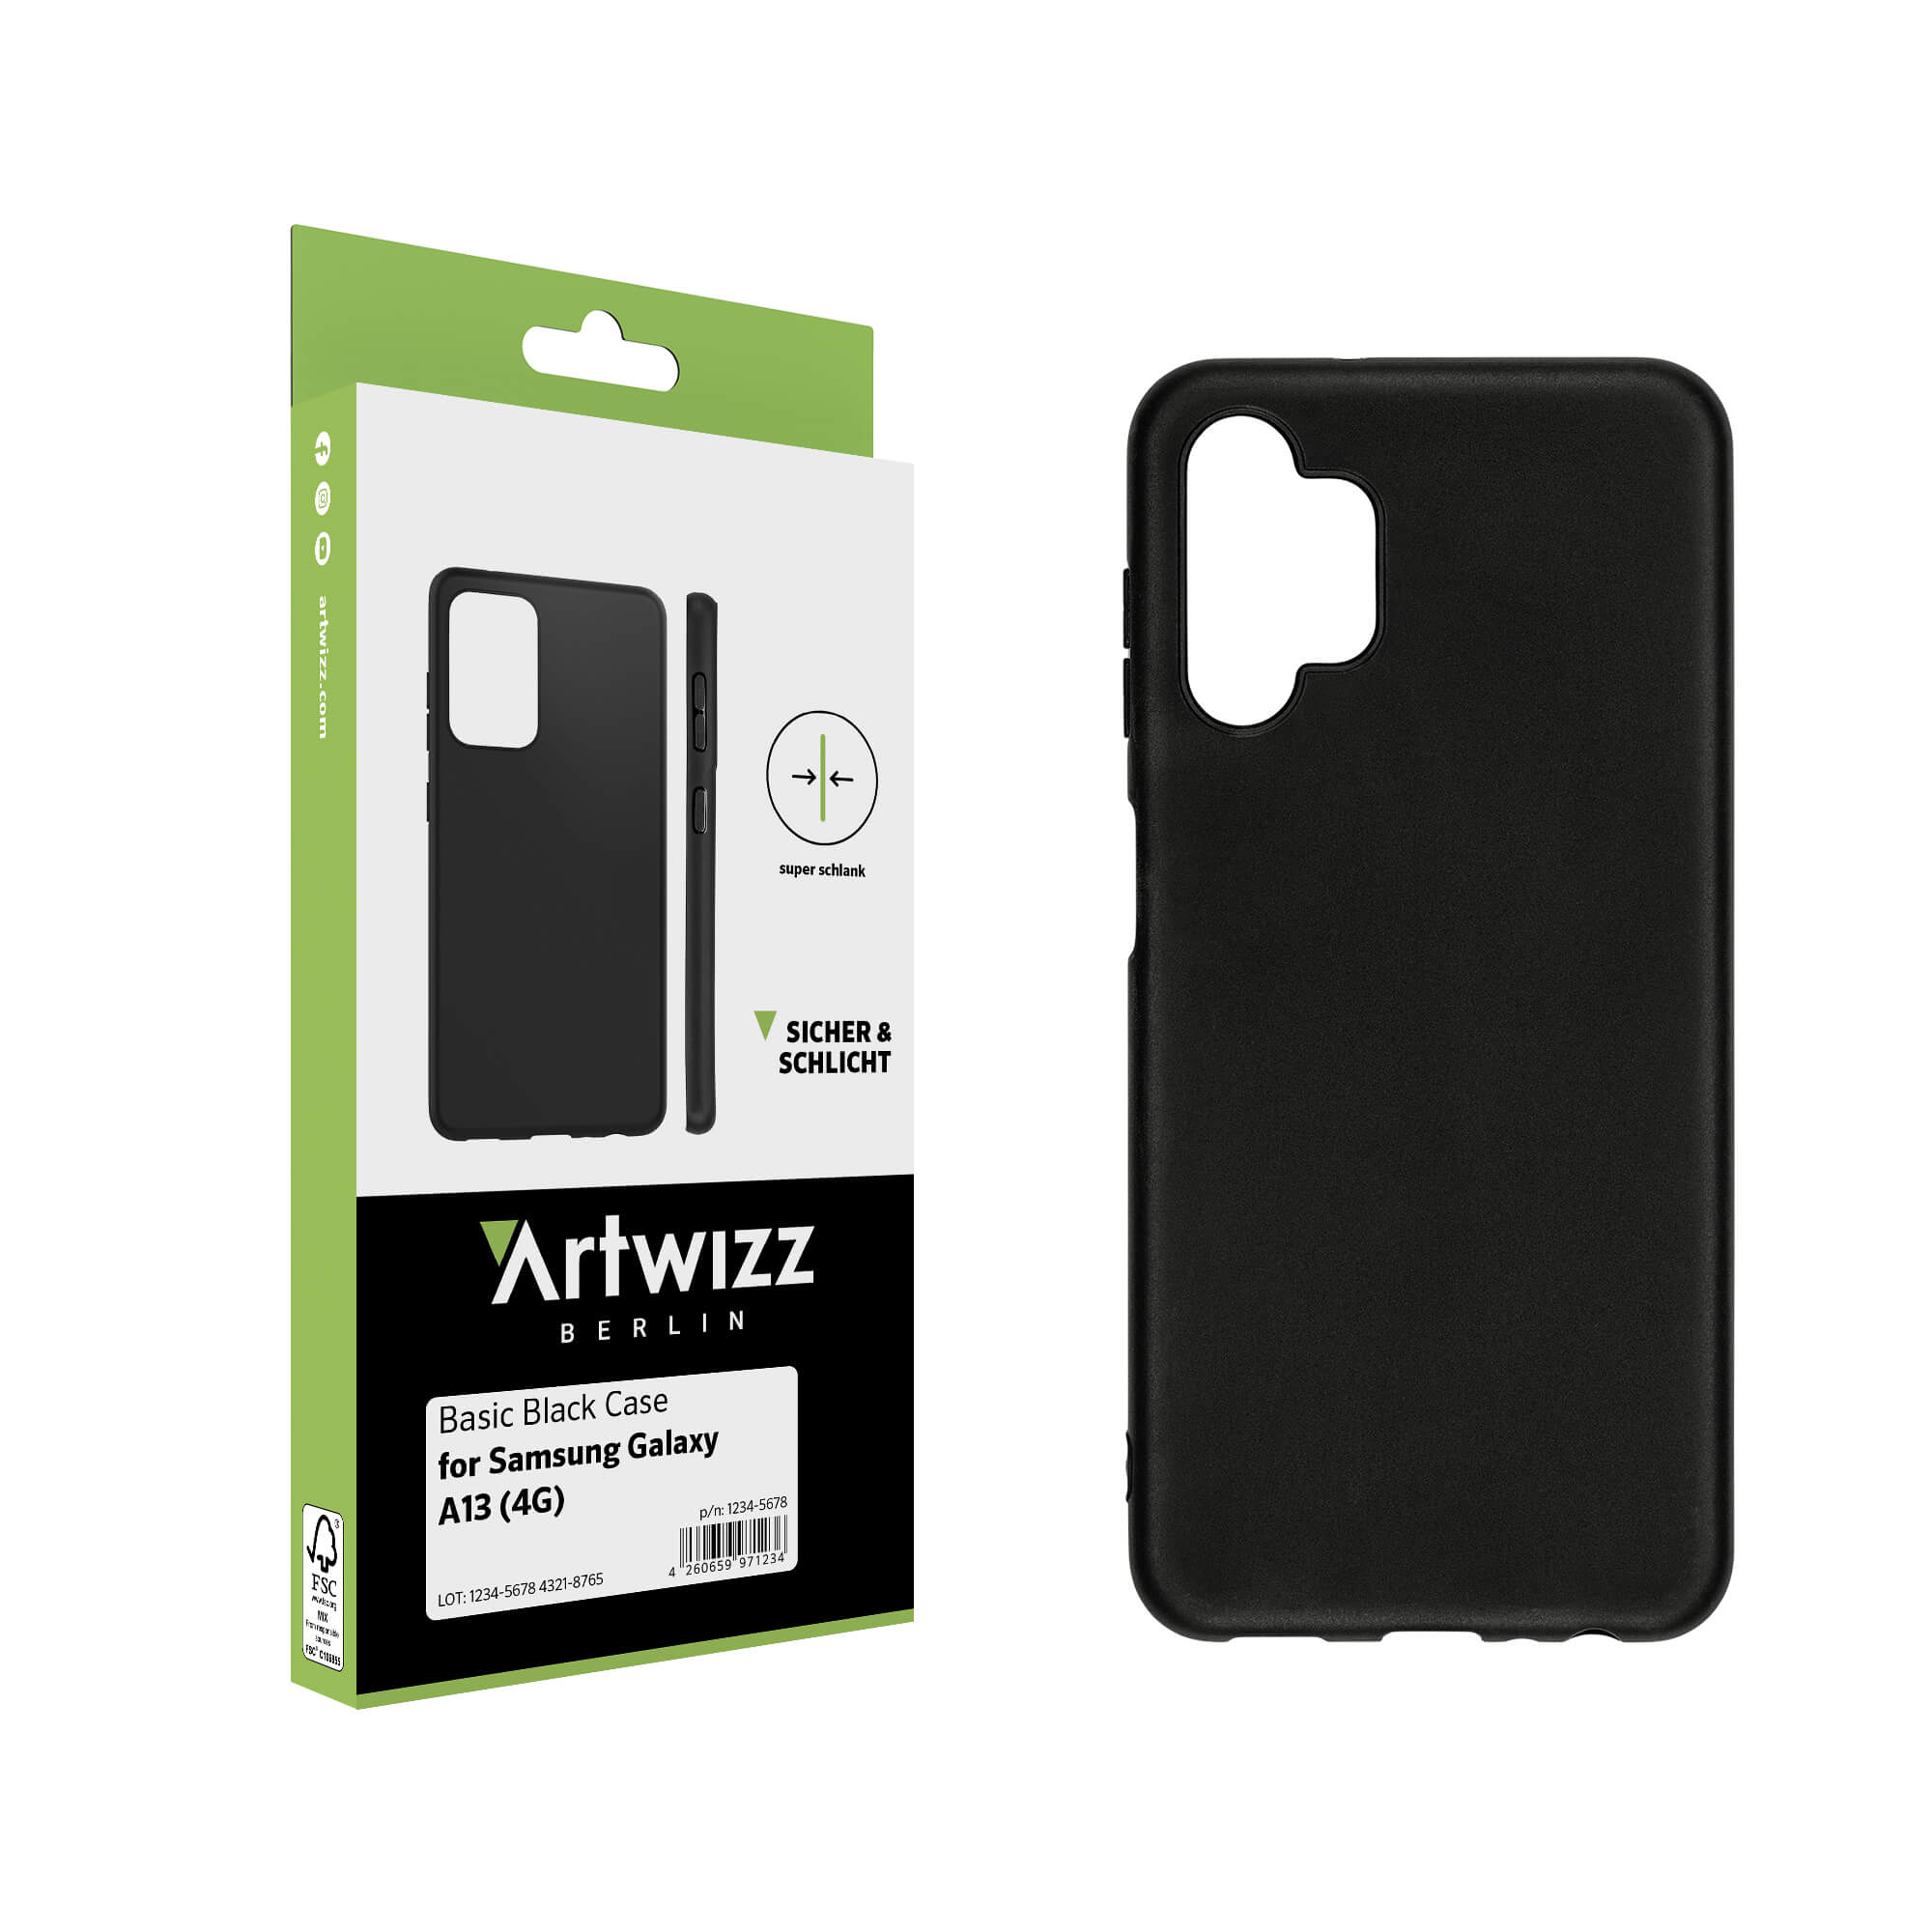 (4G), Galaxy Schwarz Basic Backcover, A13 Black ARTWIZZ Samsung, Case,